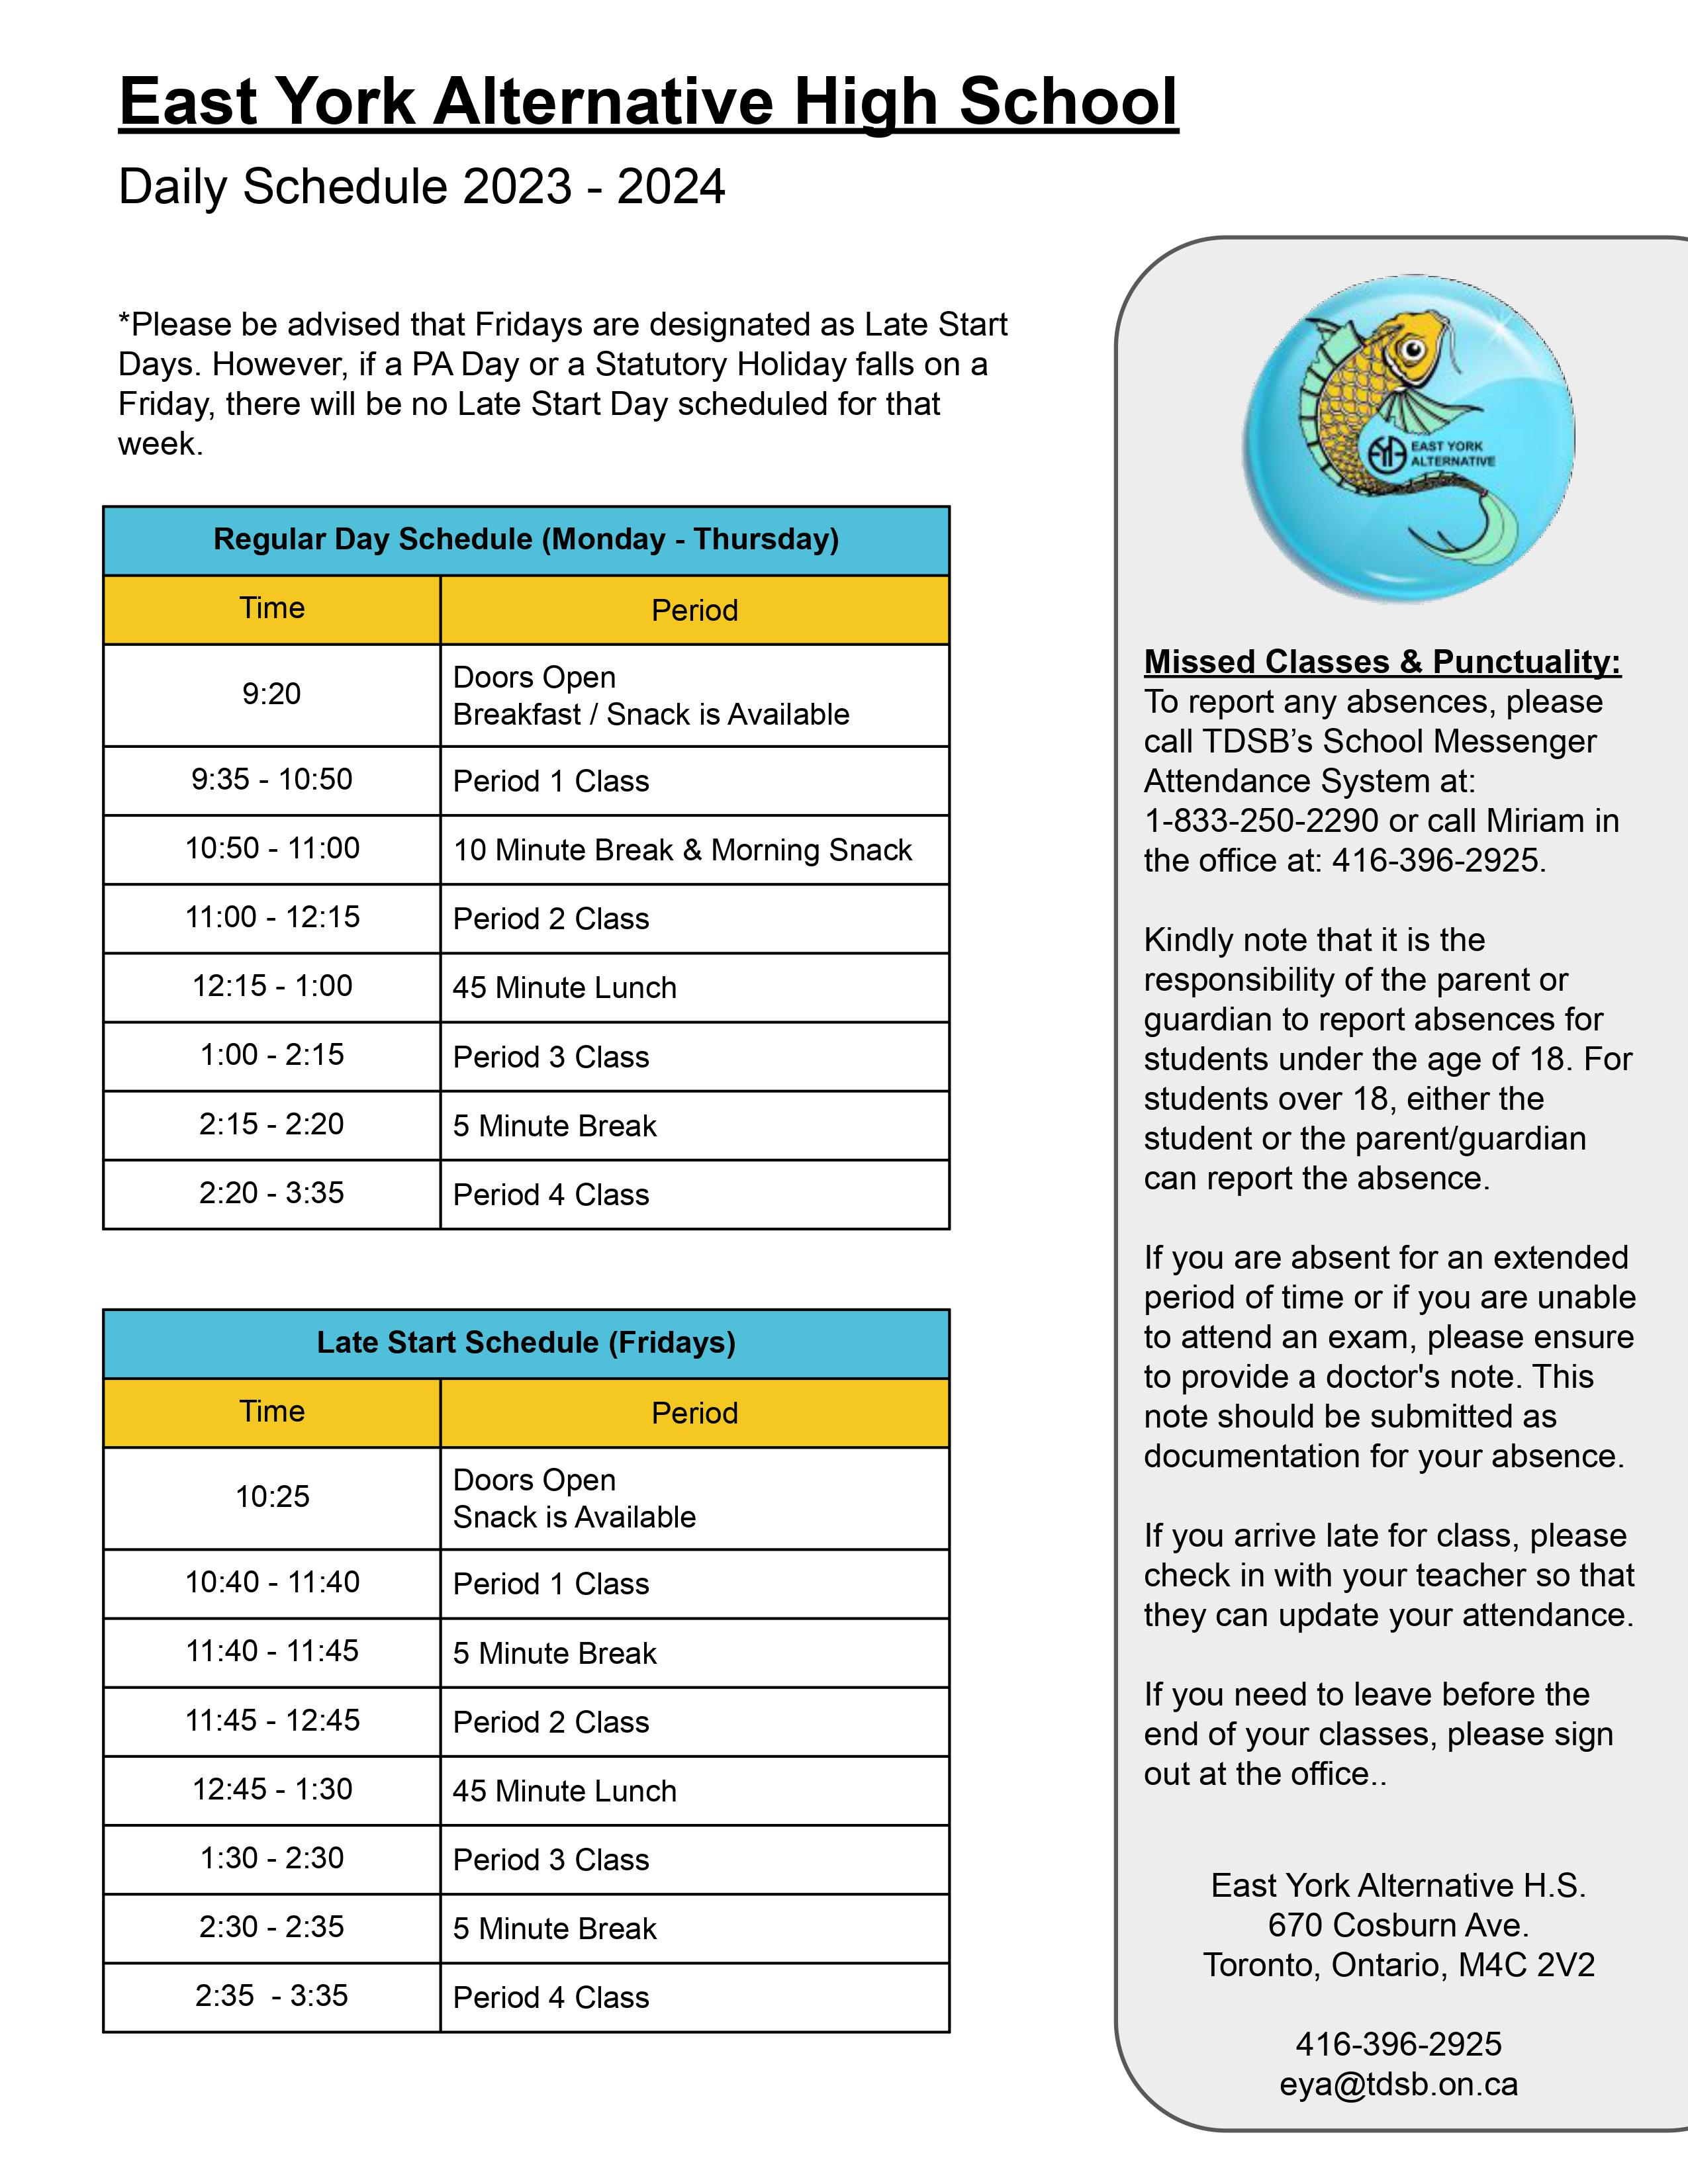 EYA 2023 - 2024 Daily Schedule (1)